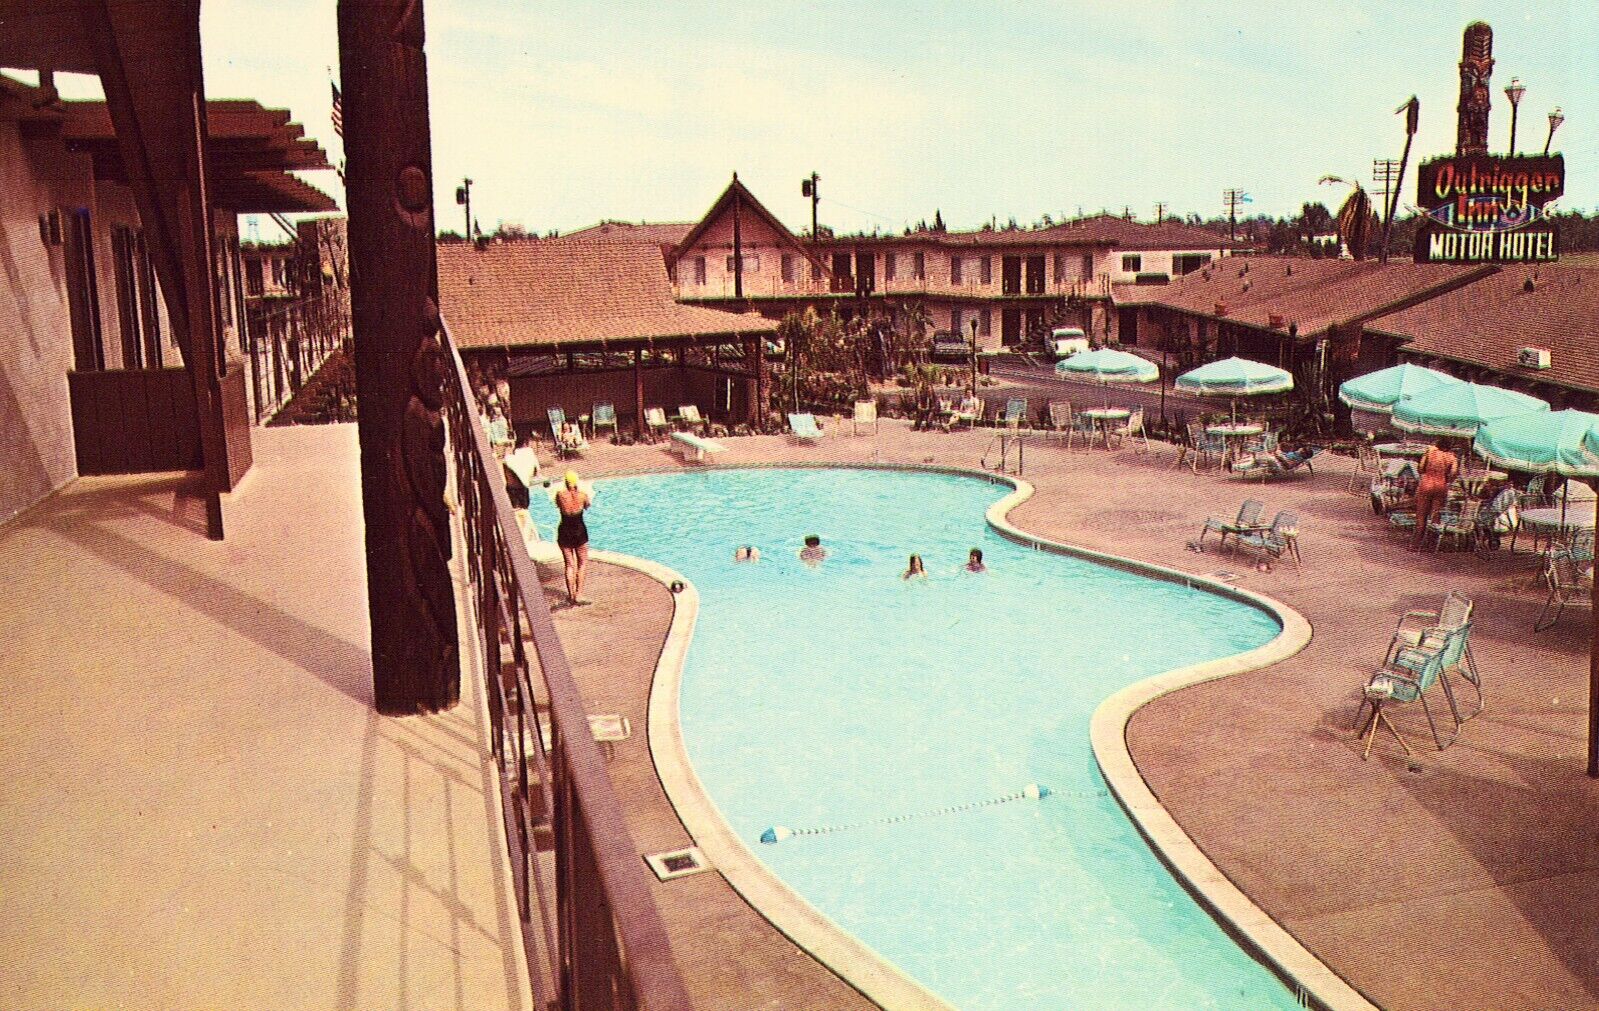 Pool, Outrigger Inn Motor Hotel - Long Beach, California Vintage Postcard